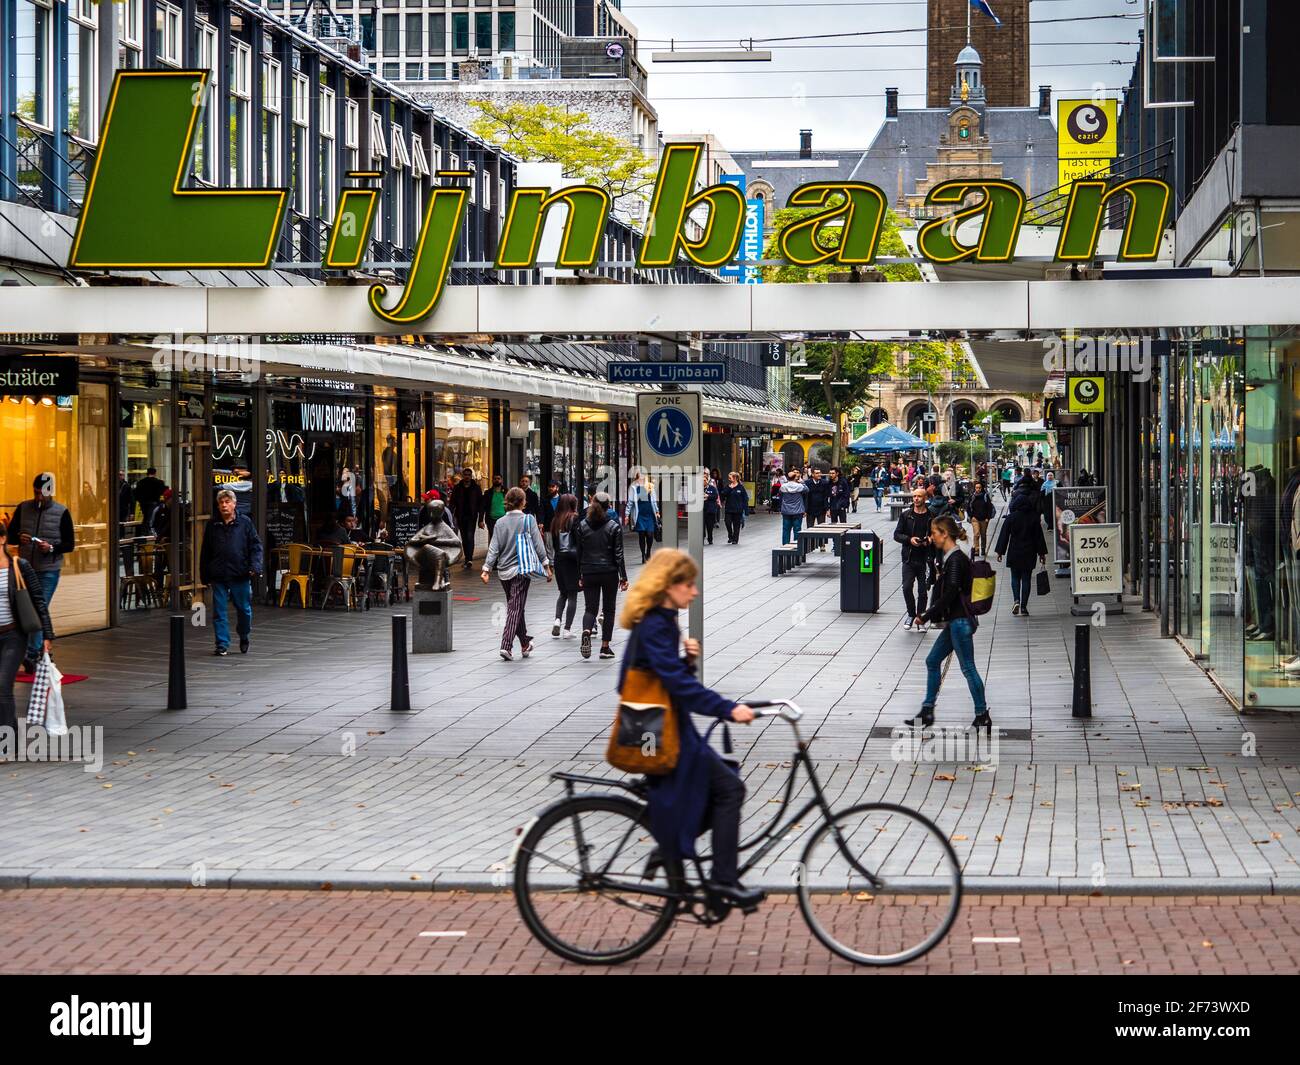 Lijnbaan Street Rotterdam High Resolution Stock Photography and Images -  Alamy